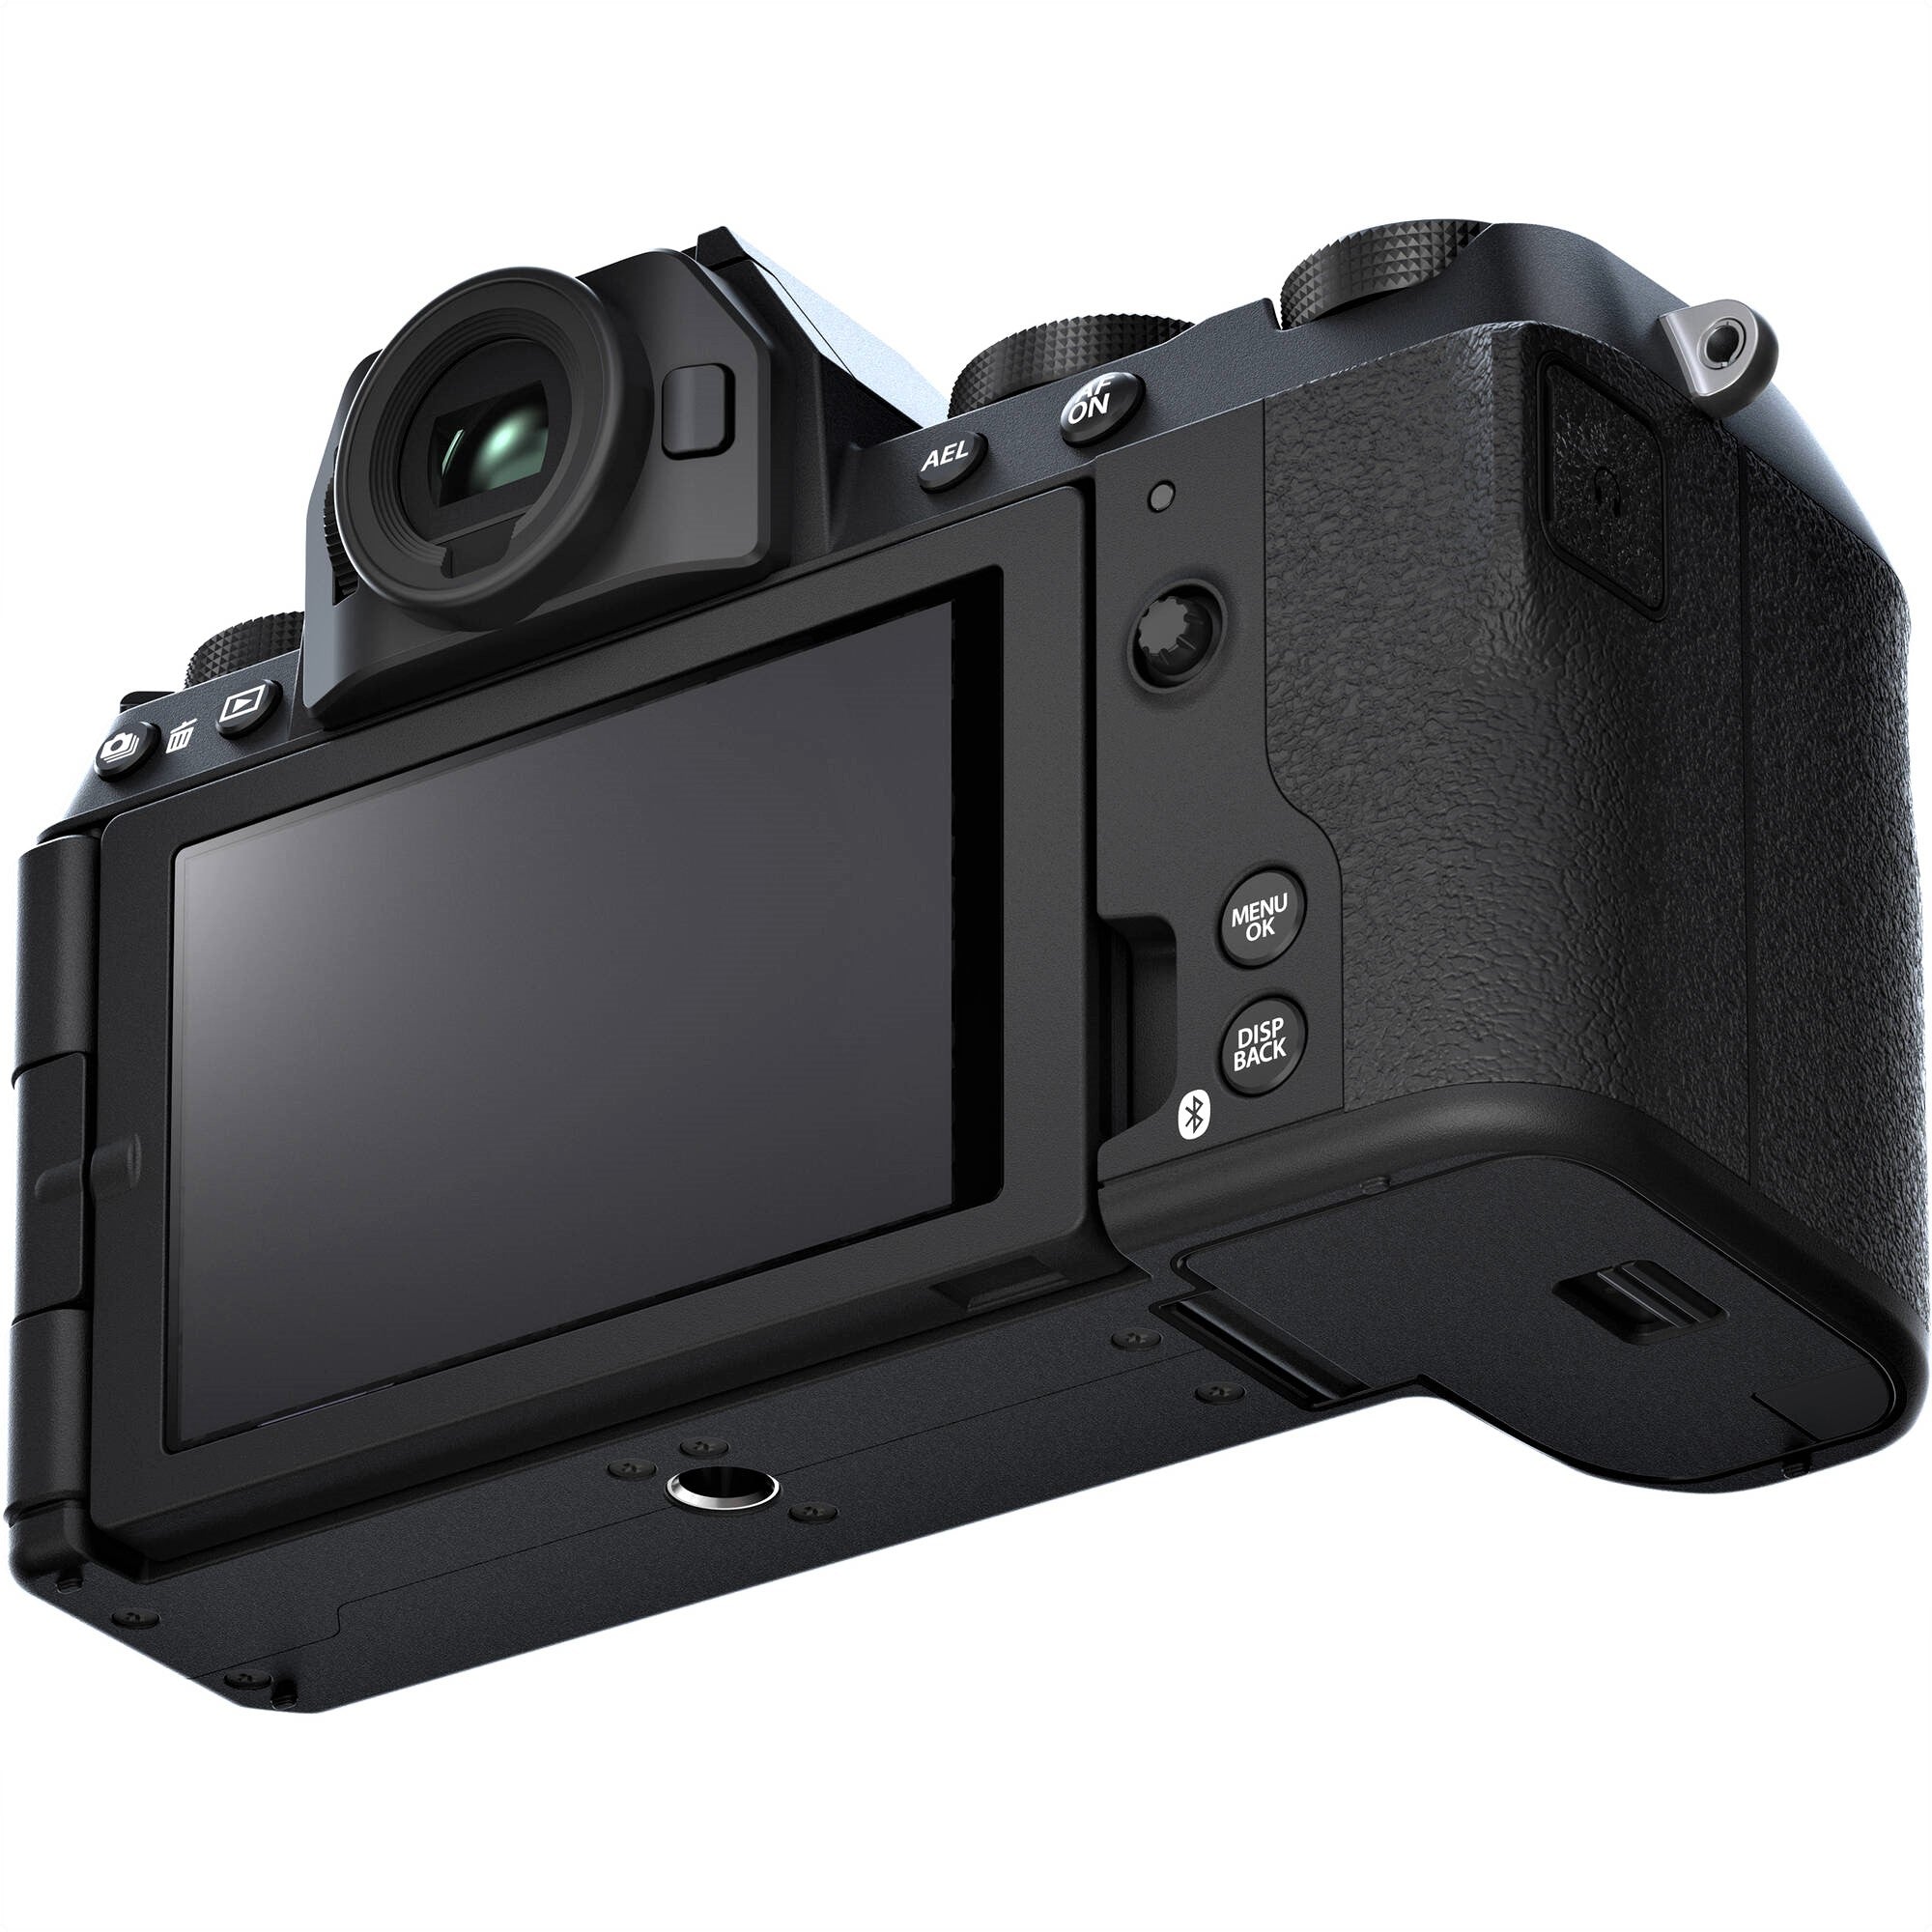 Fujifilm X-S20 Mirrorless Digital Camera